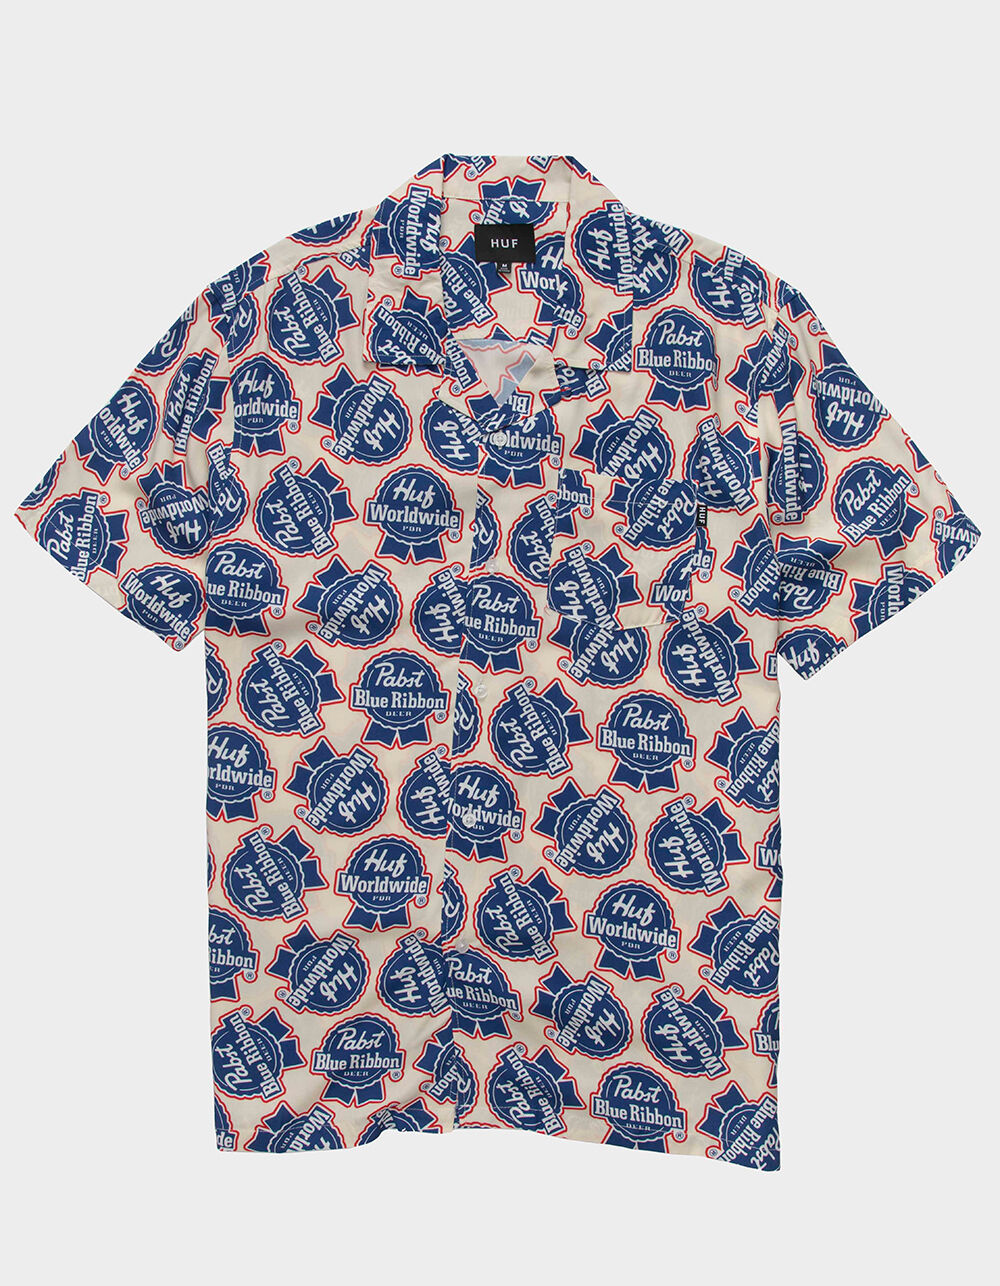 HUF x Pabst Blue Ribbon Mens Button Up Shirt - NATURAL | Tillys